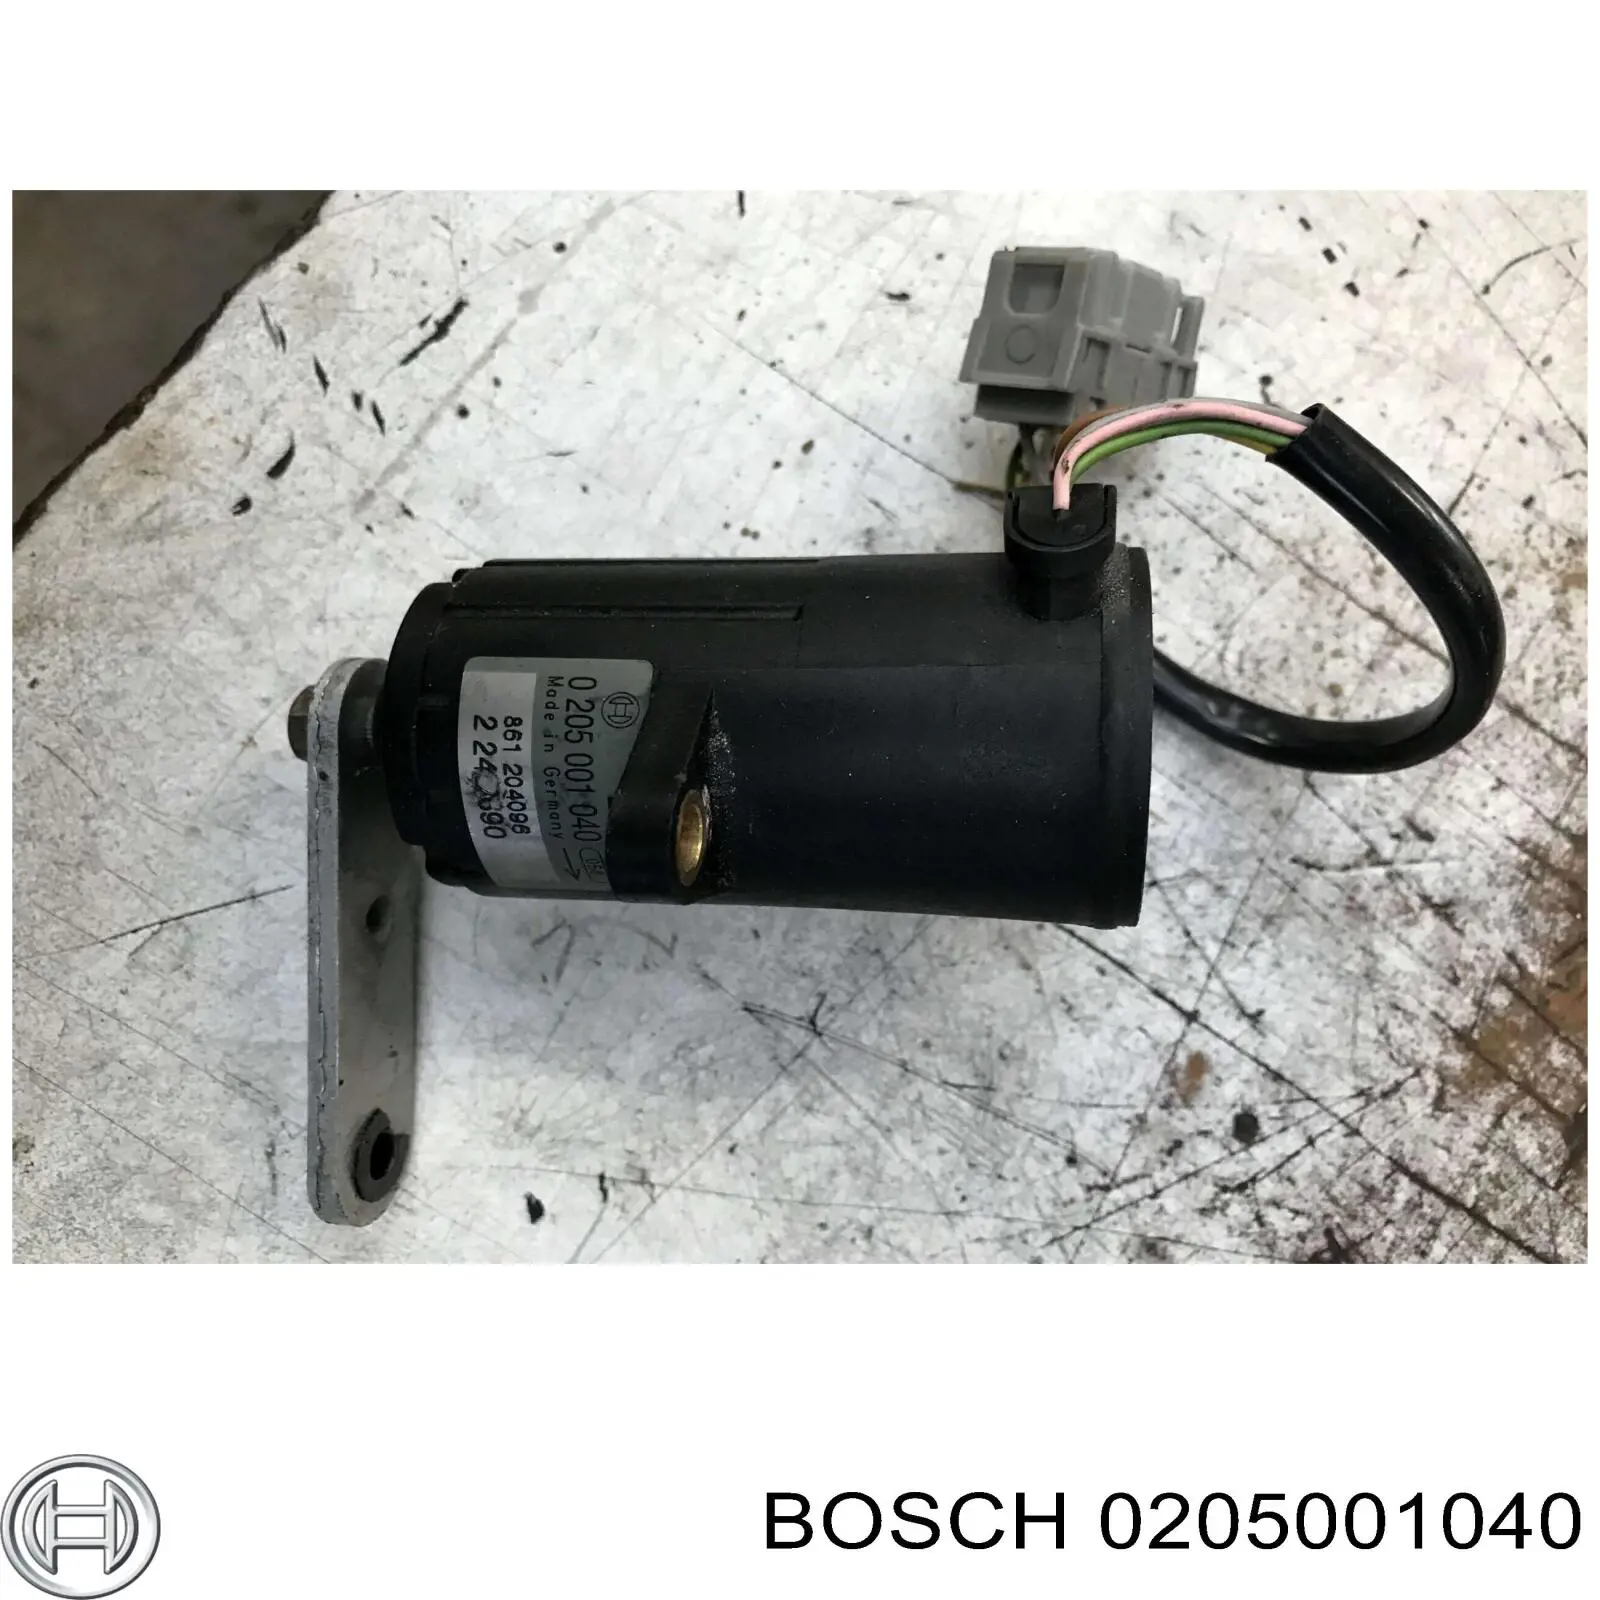 0205001040 Bosch sensor de posicion del pedal del acelerador